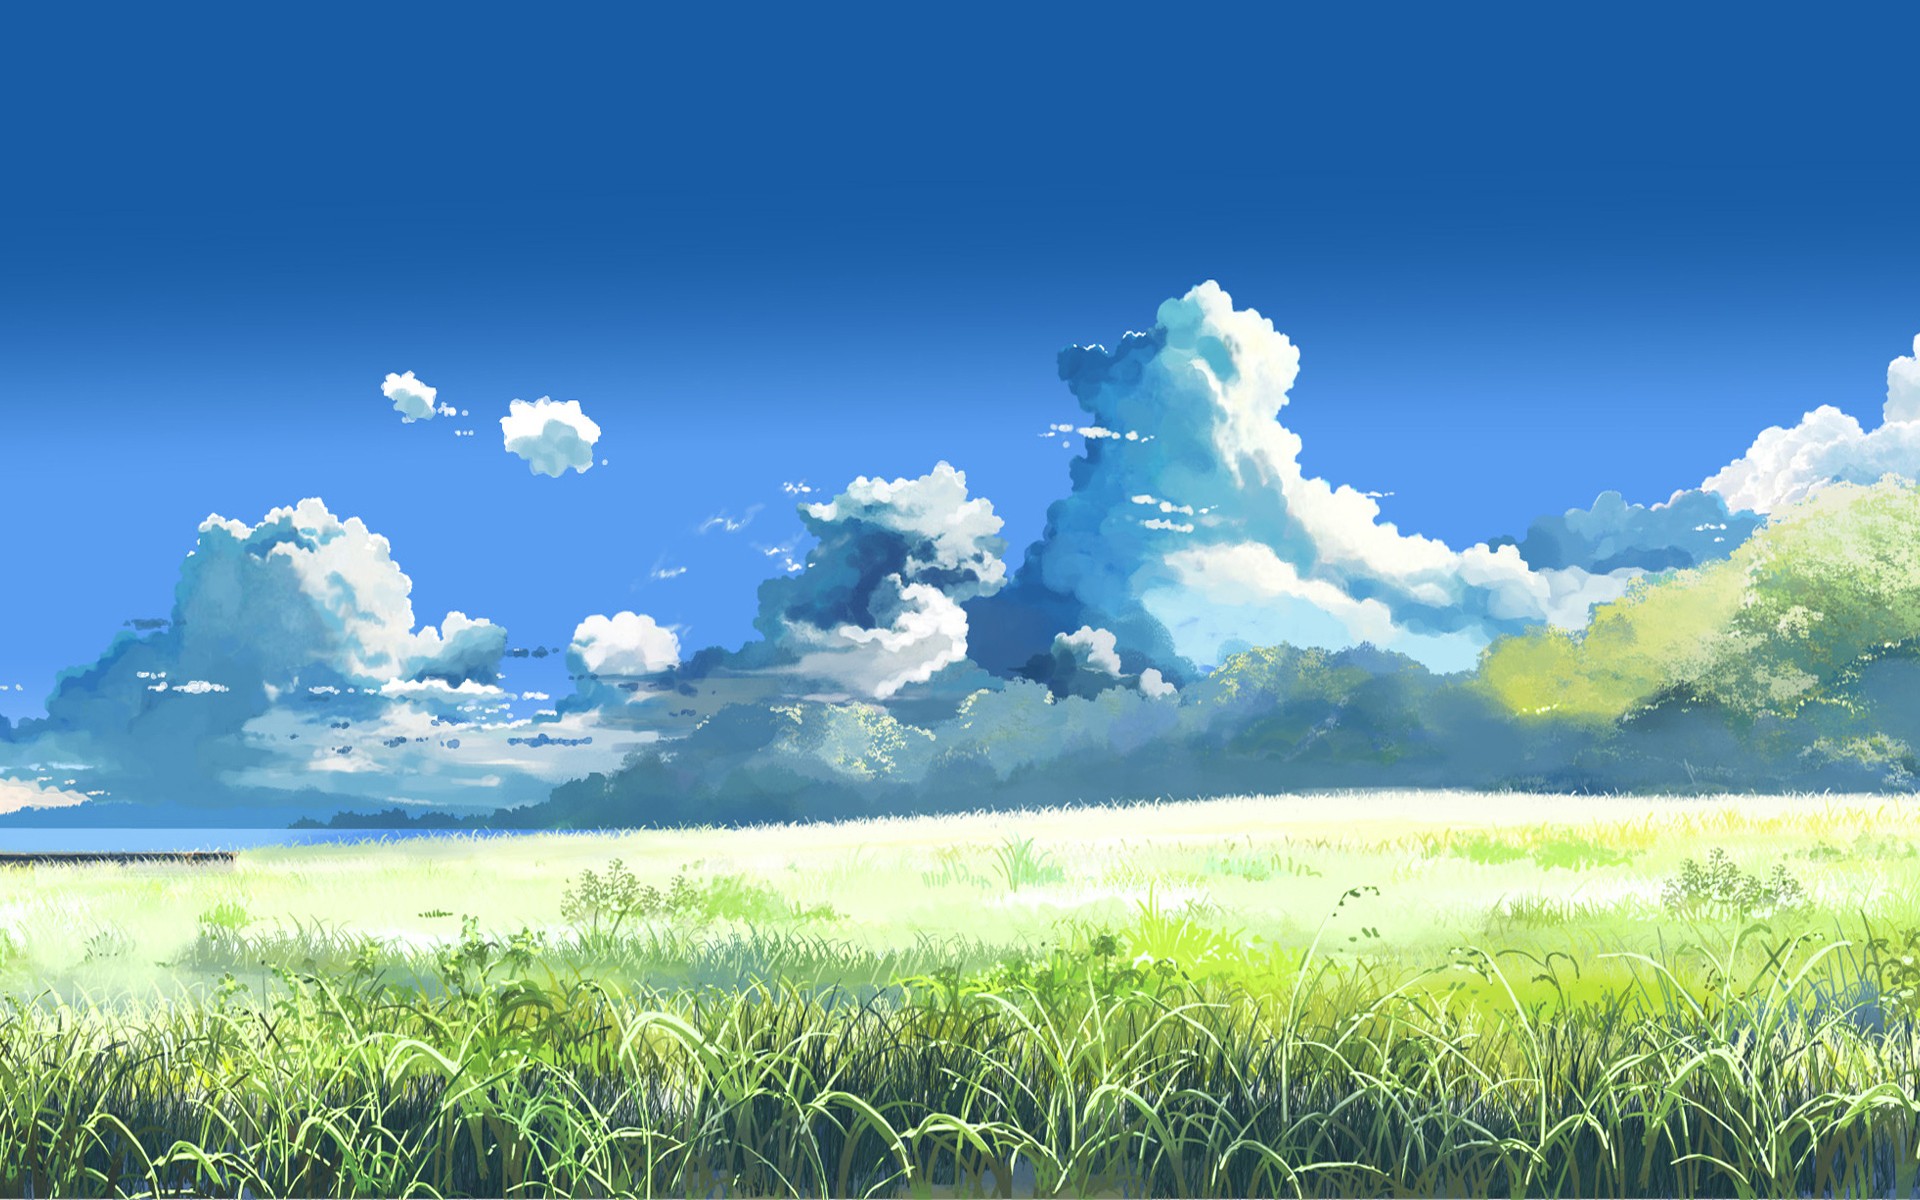 Photoshop Landscape Painting Using Kristof Dedene Anime Cloud Brush Pack -  YouTube